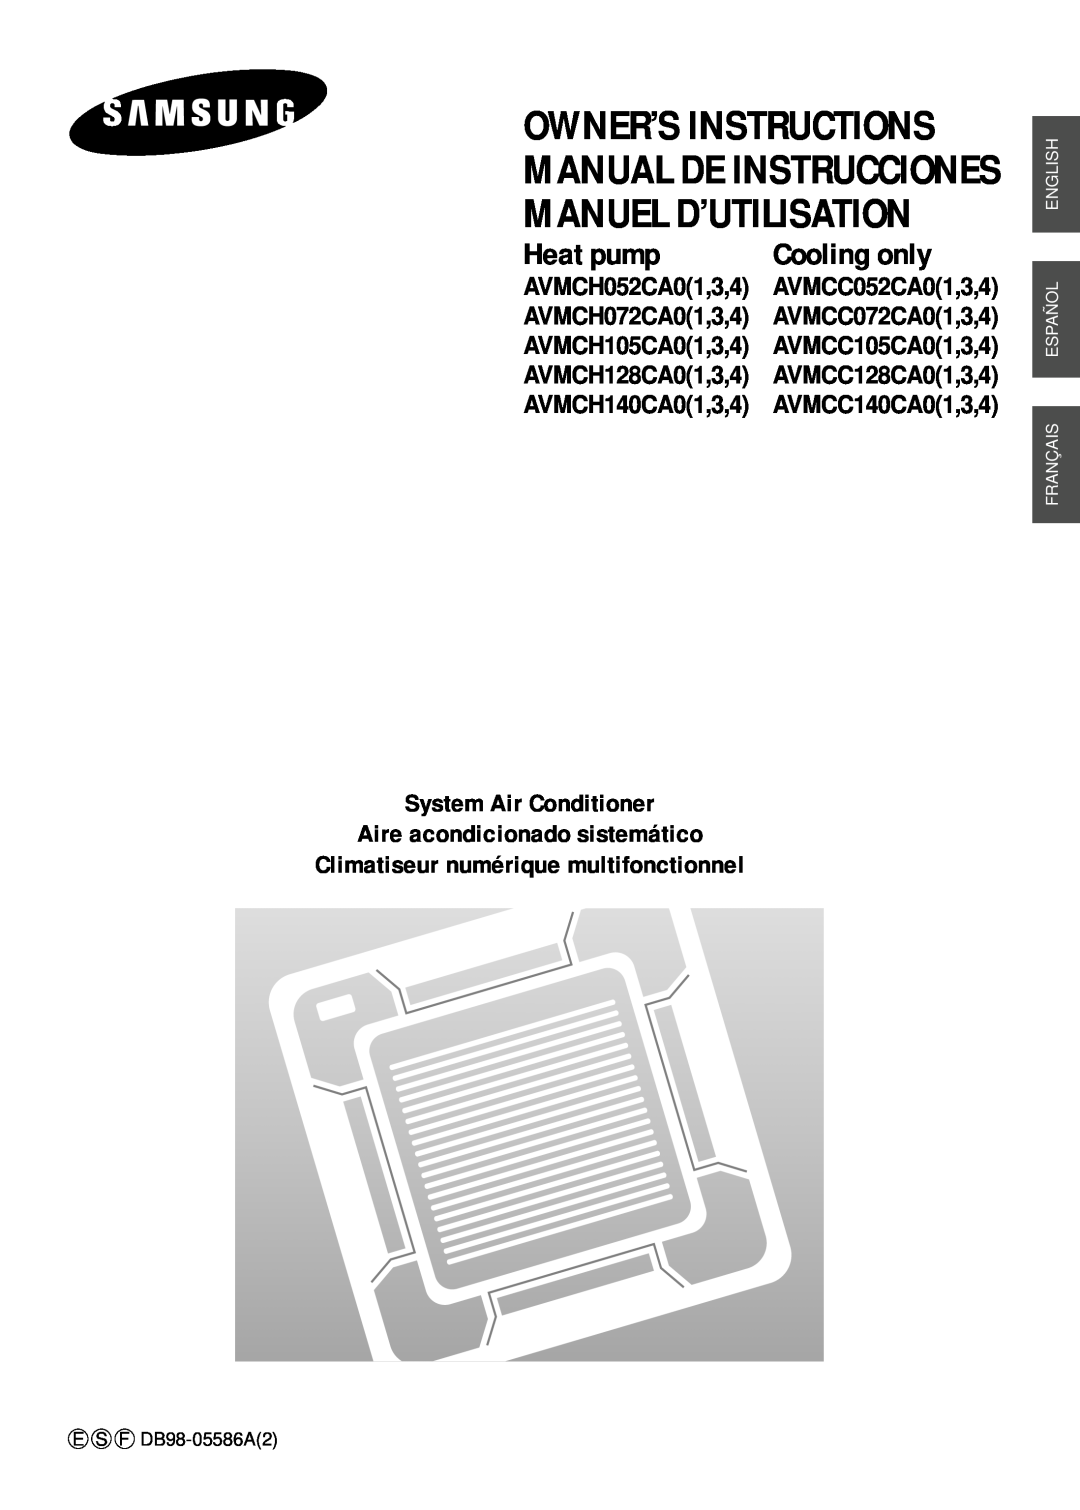 Samsung E S F DB98-05586A manuel dutilisation System Air Conditioner, Aire acondicionado sistemático, Owner’S Instructions 